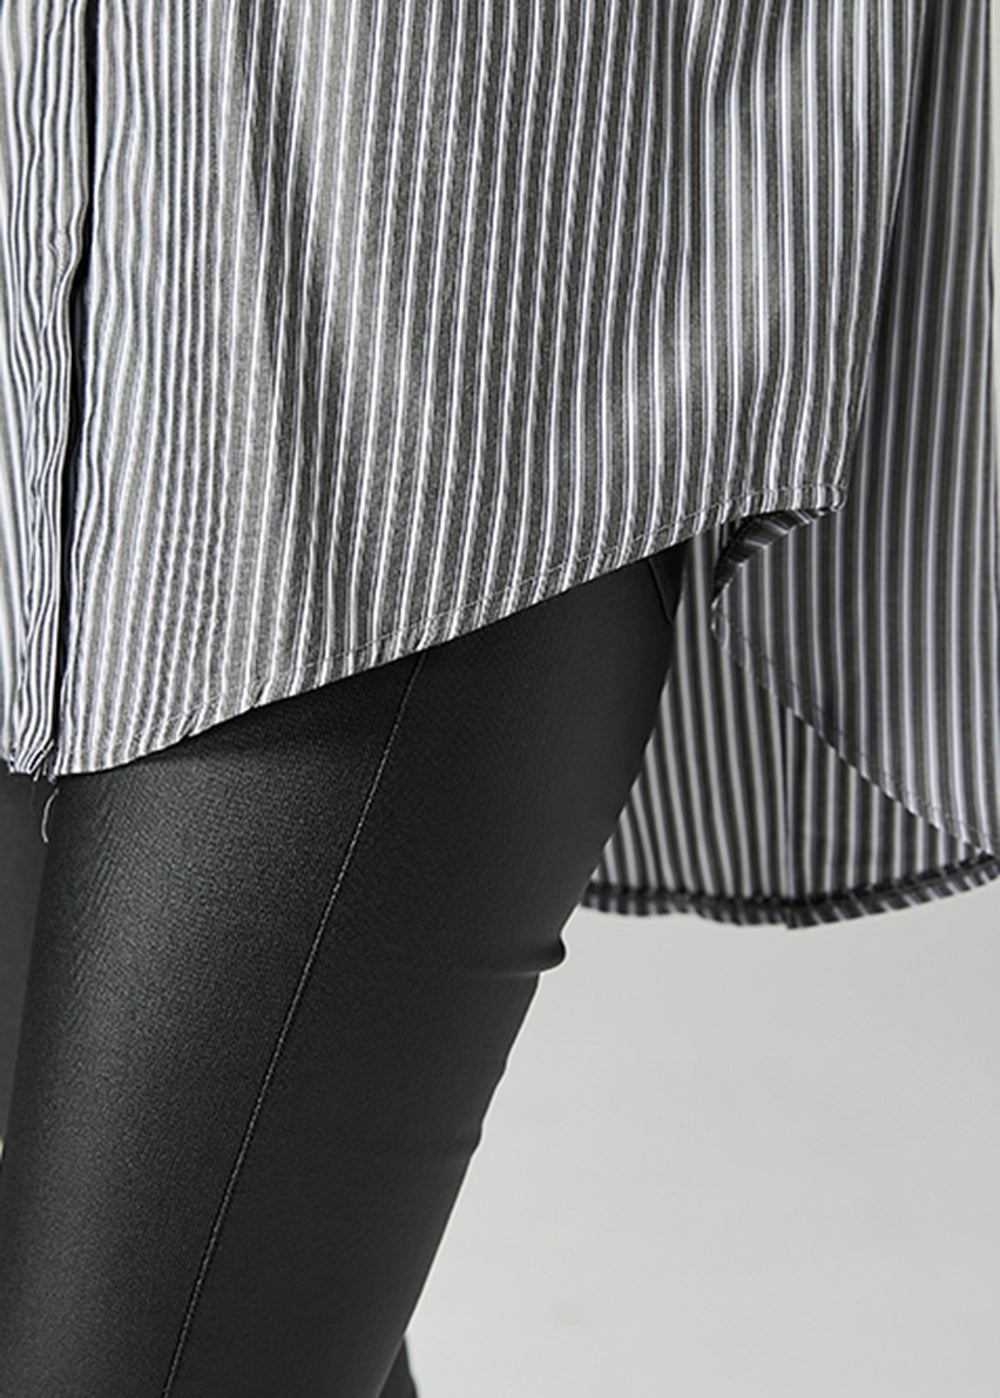 French Grey Peter Pan Collar Striped Pockets Cotton Shirt Spring LY2438 - fabuloryshop